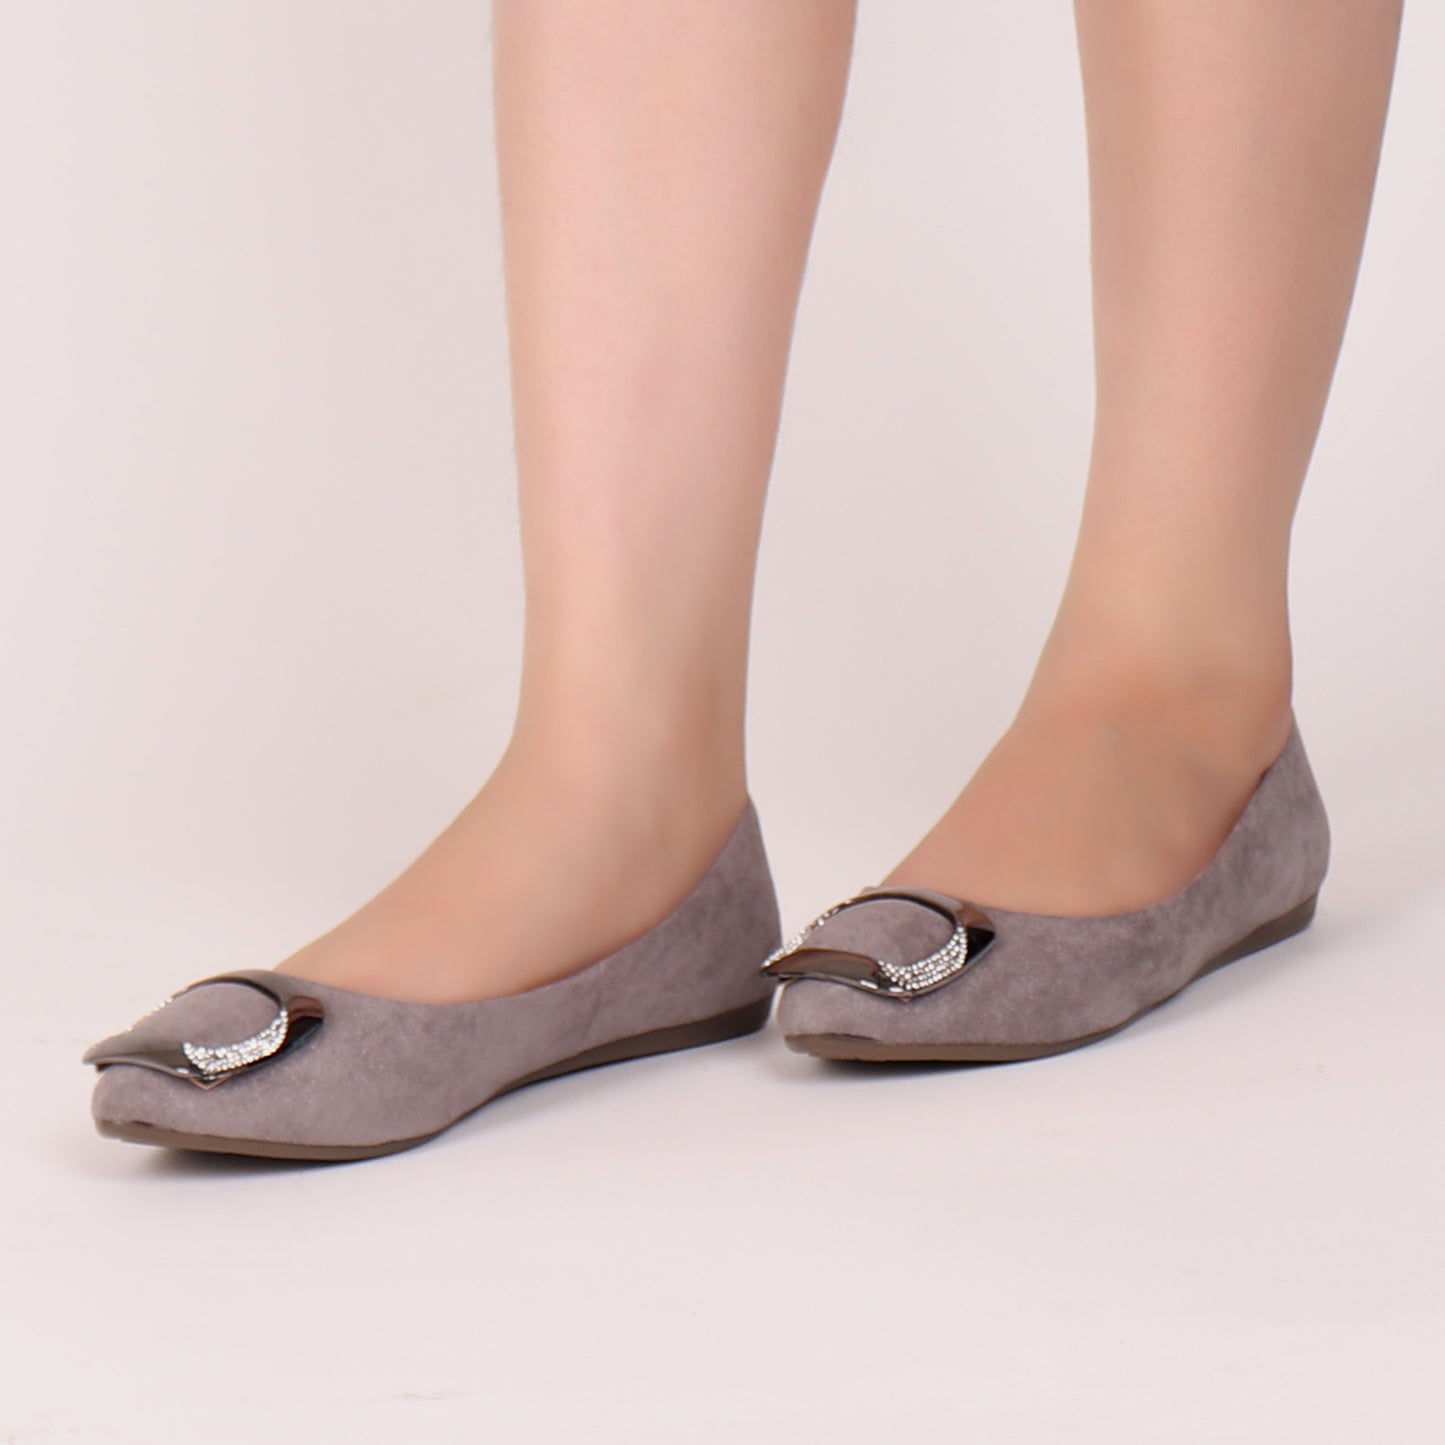 Foot Wear,Everyday Fun Flats in Grey - Cippele Multi Store